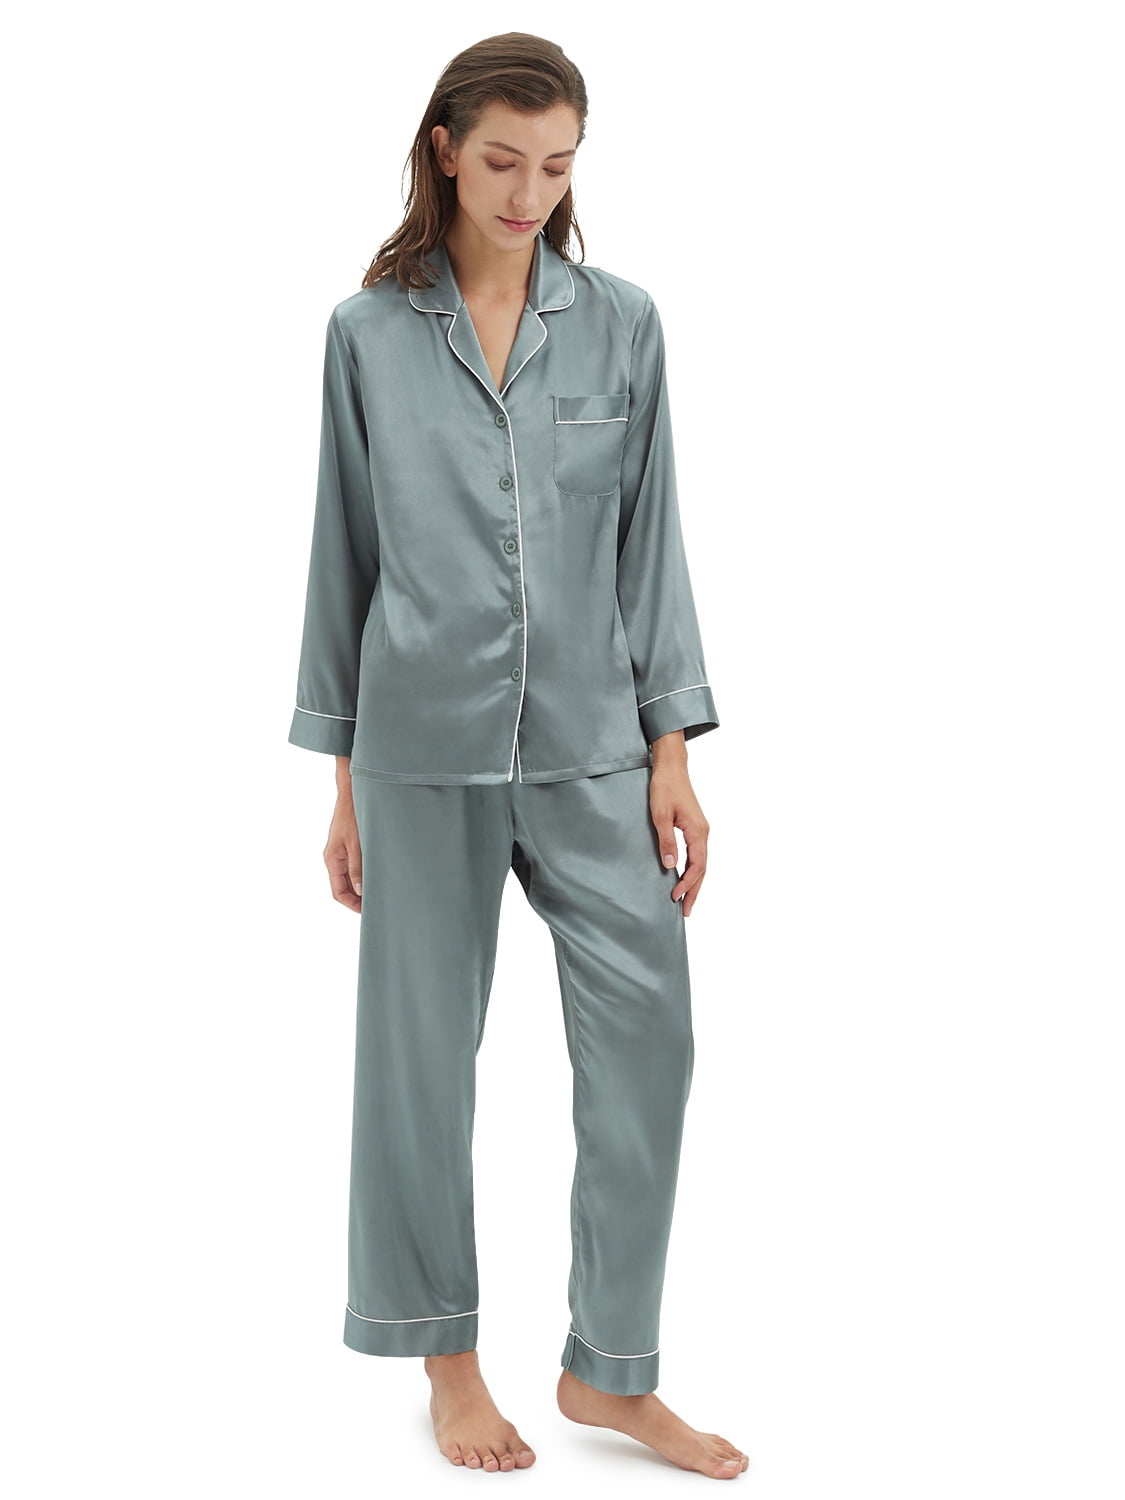 Long Sleeve Button Down PJ Set with Pocket Sleepwear Loungewear M-XXL SIORO Mens Silk Satin Pajama Sets